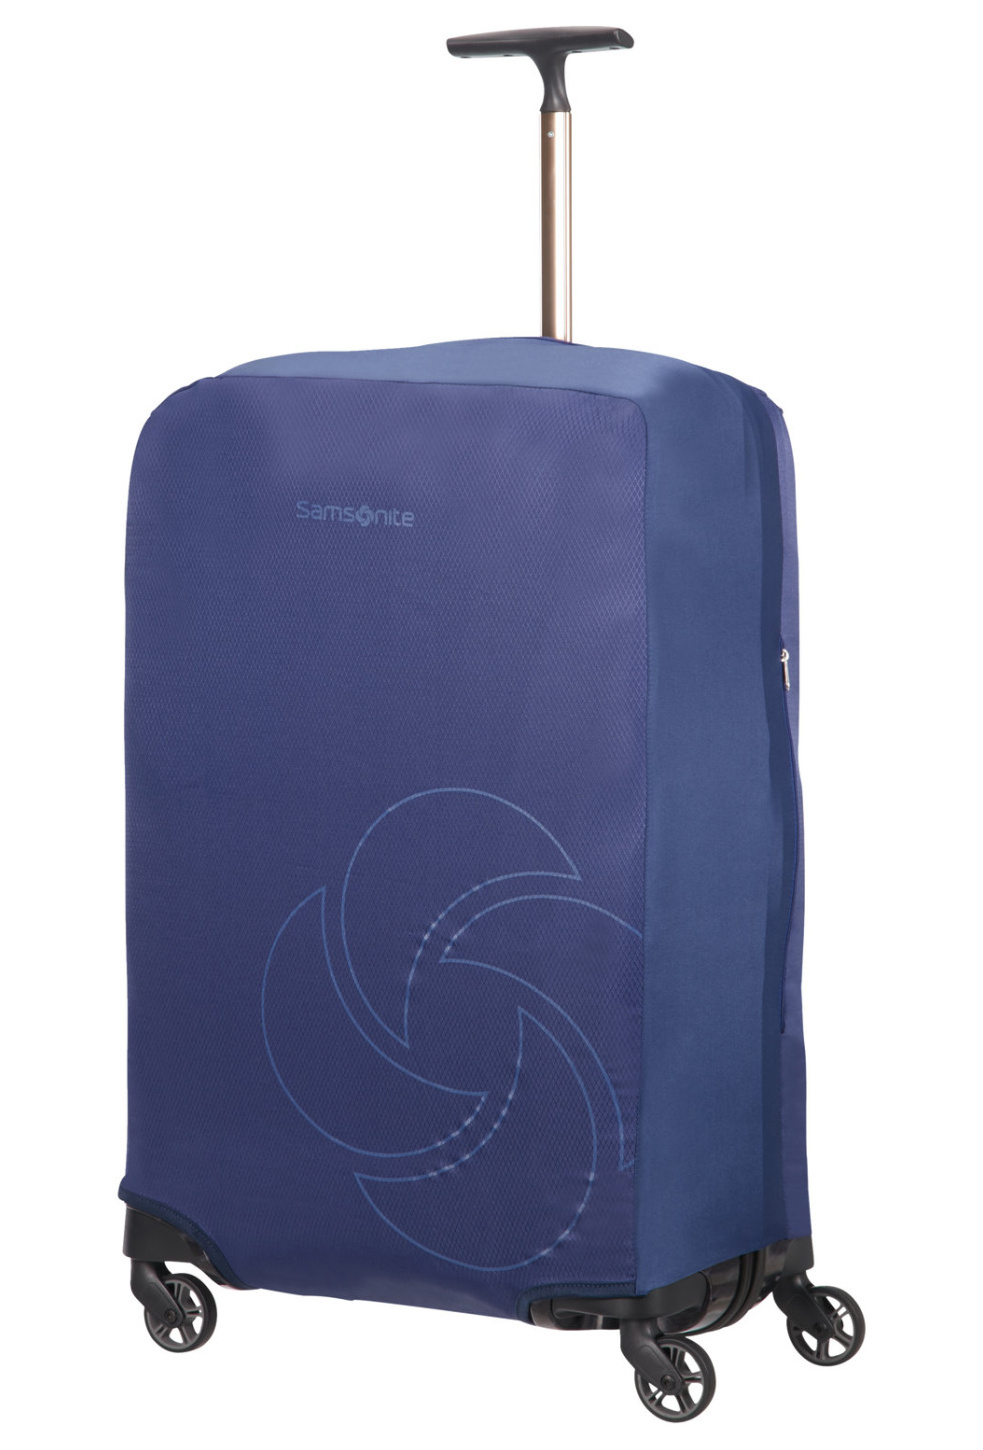 Obal Samsonite na kufr M C01010-11 modrá